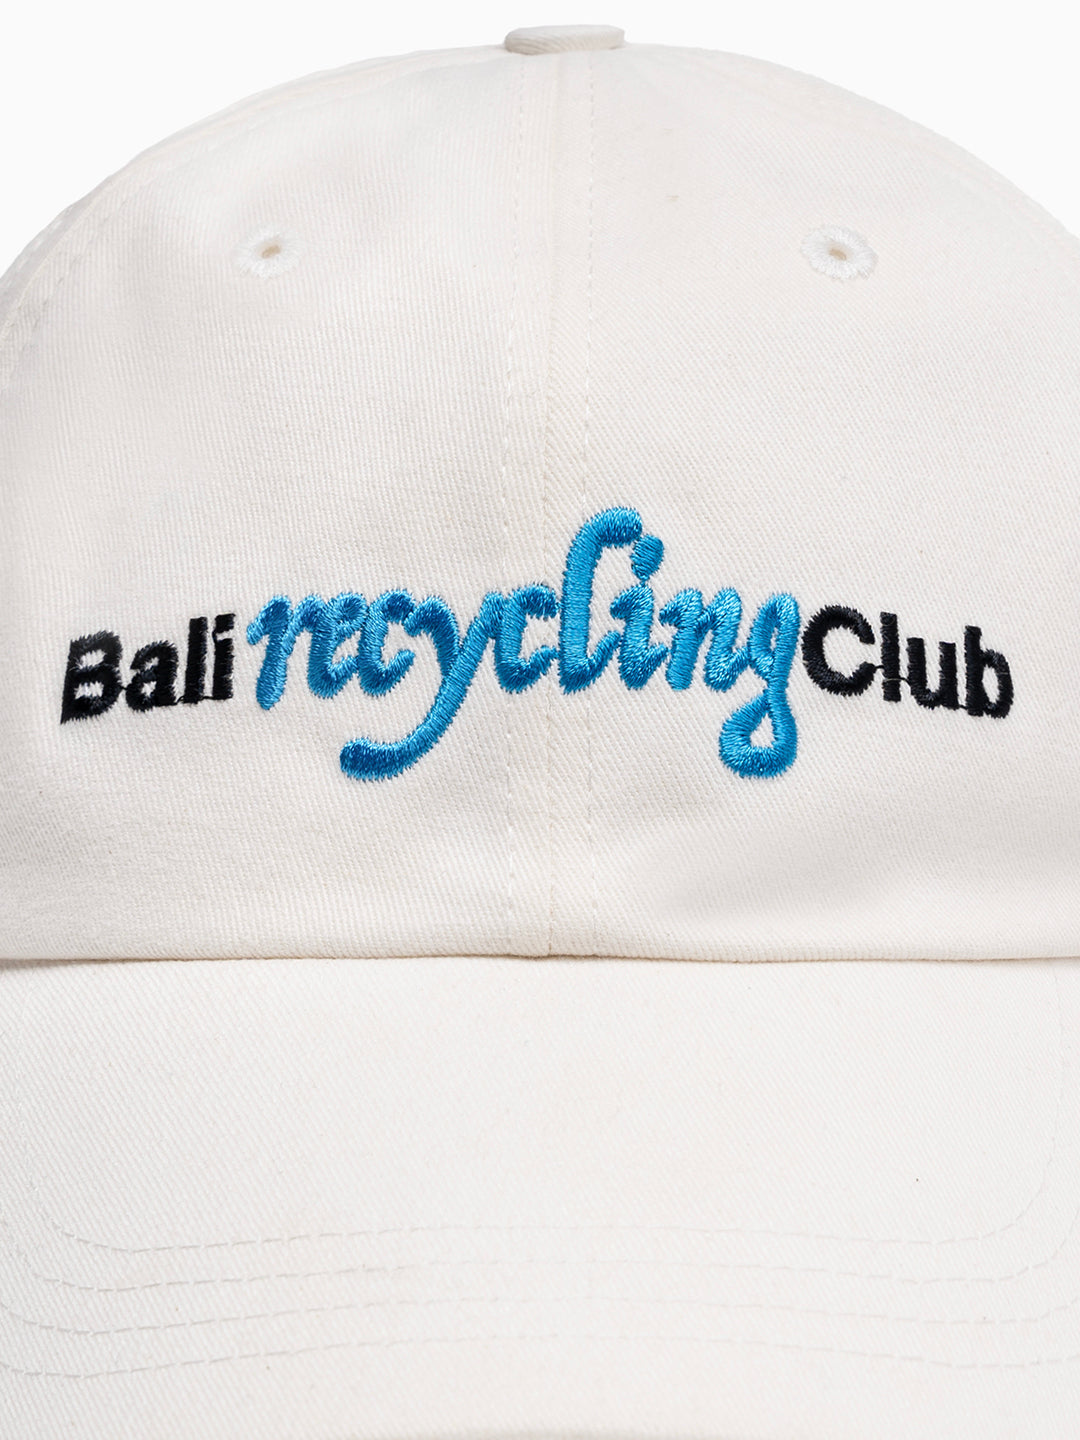 Bali Recycling Club Cap White